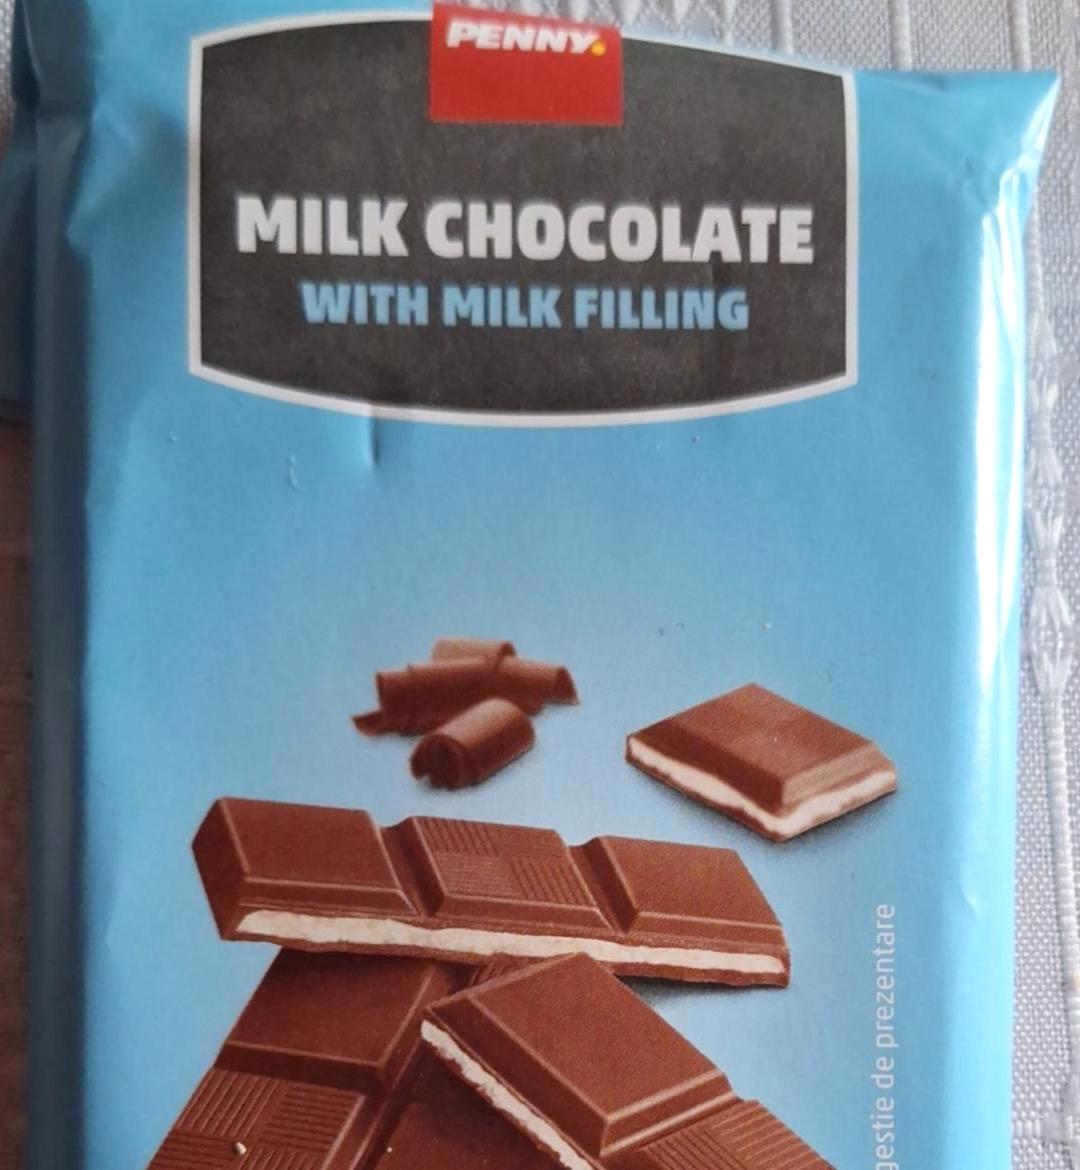 Képek - Milk chocolate with milk filling Penny